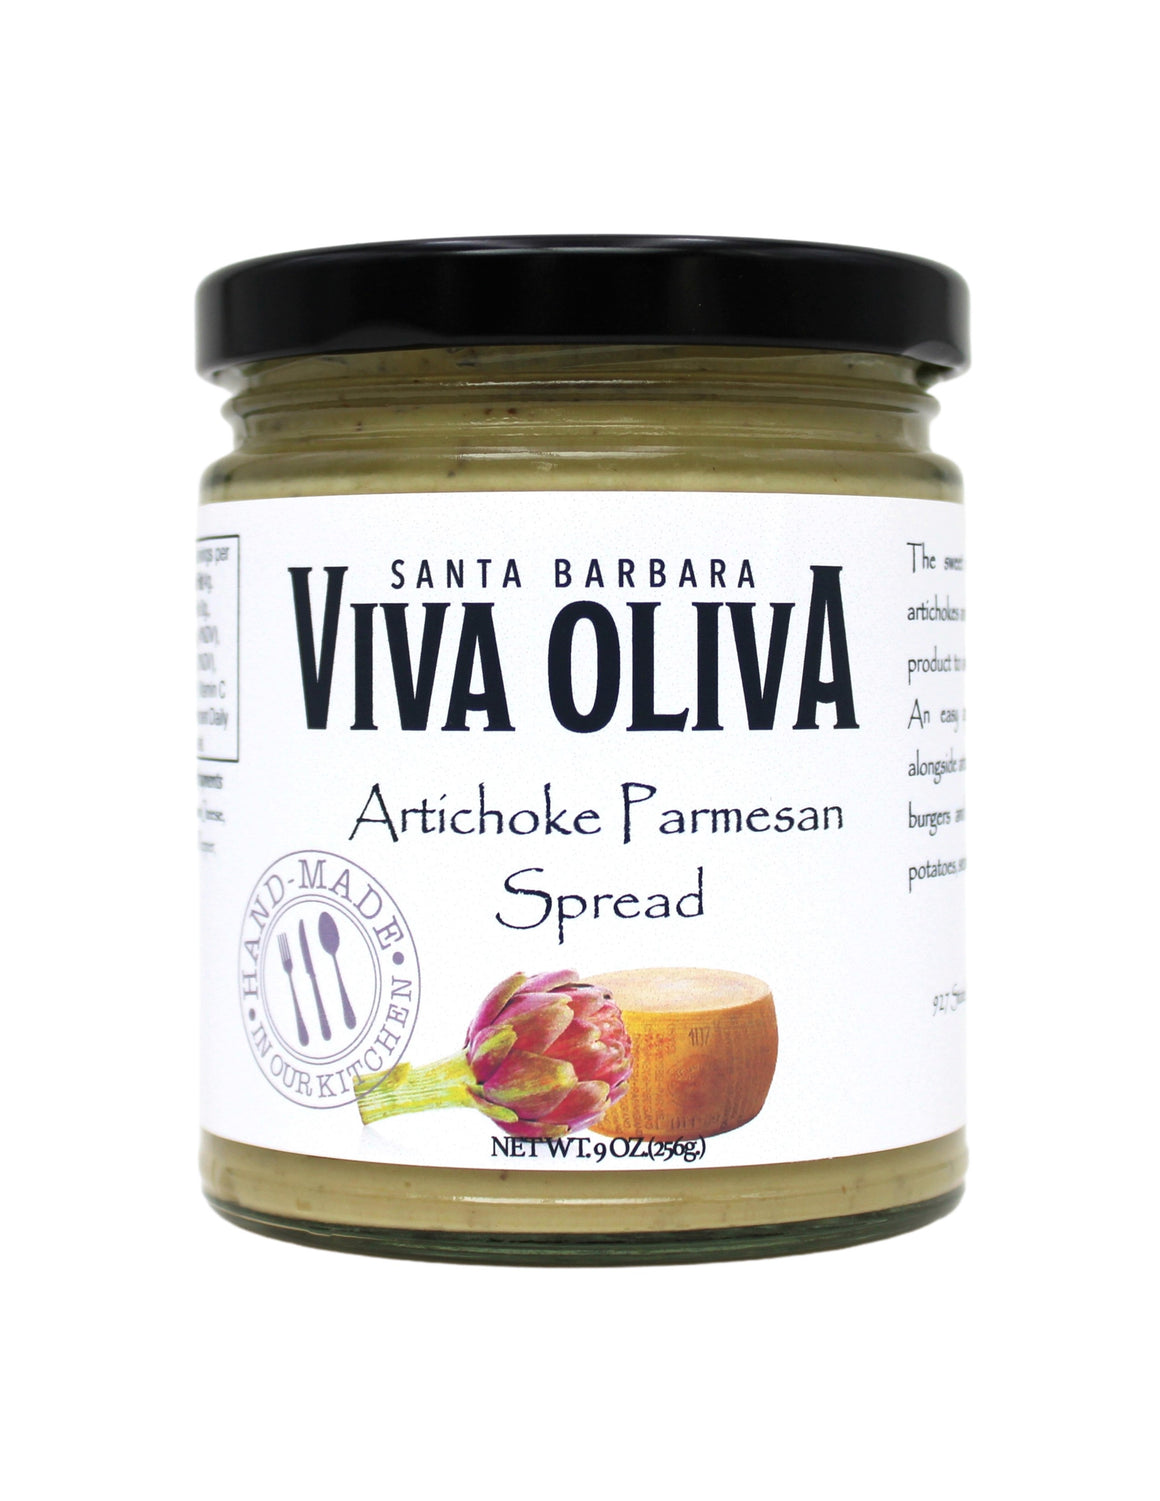 Viva Oliva Spread - Artichoke Parmesan